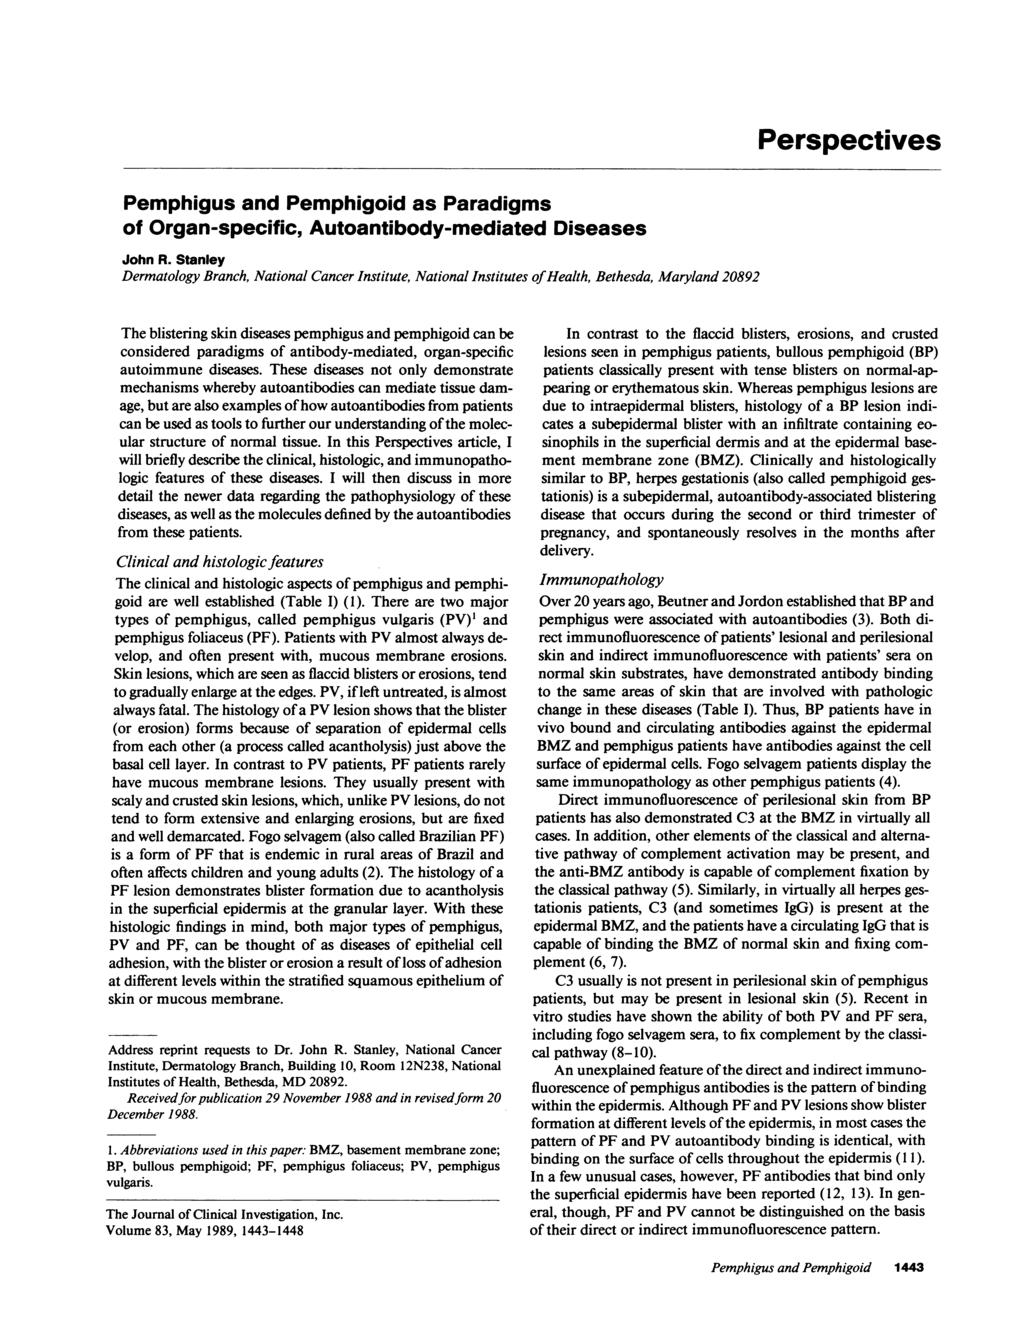 Pemphigus and Pemphigoid as Paradigms of Organ-specific, Autoantibody-mediated Diseases John R.